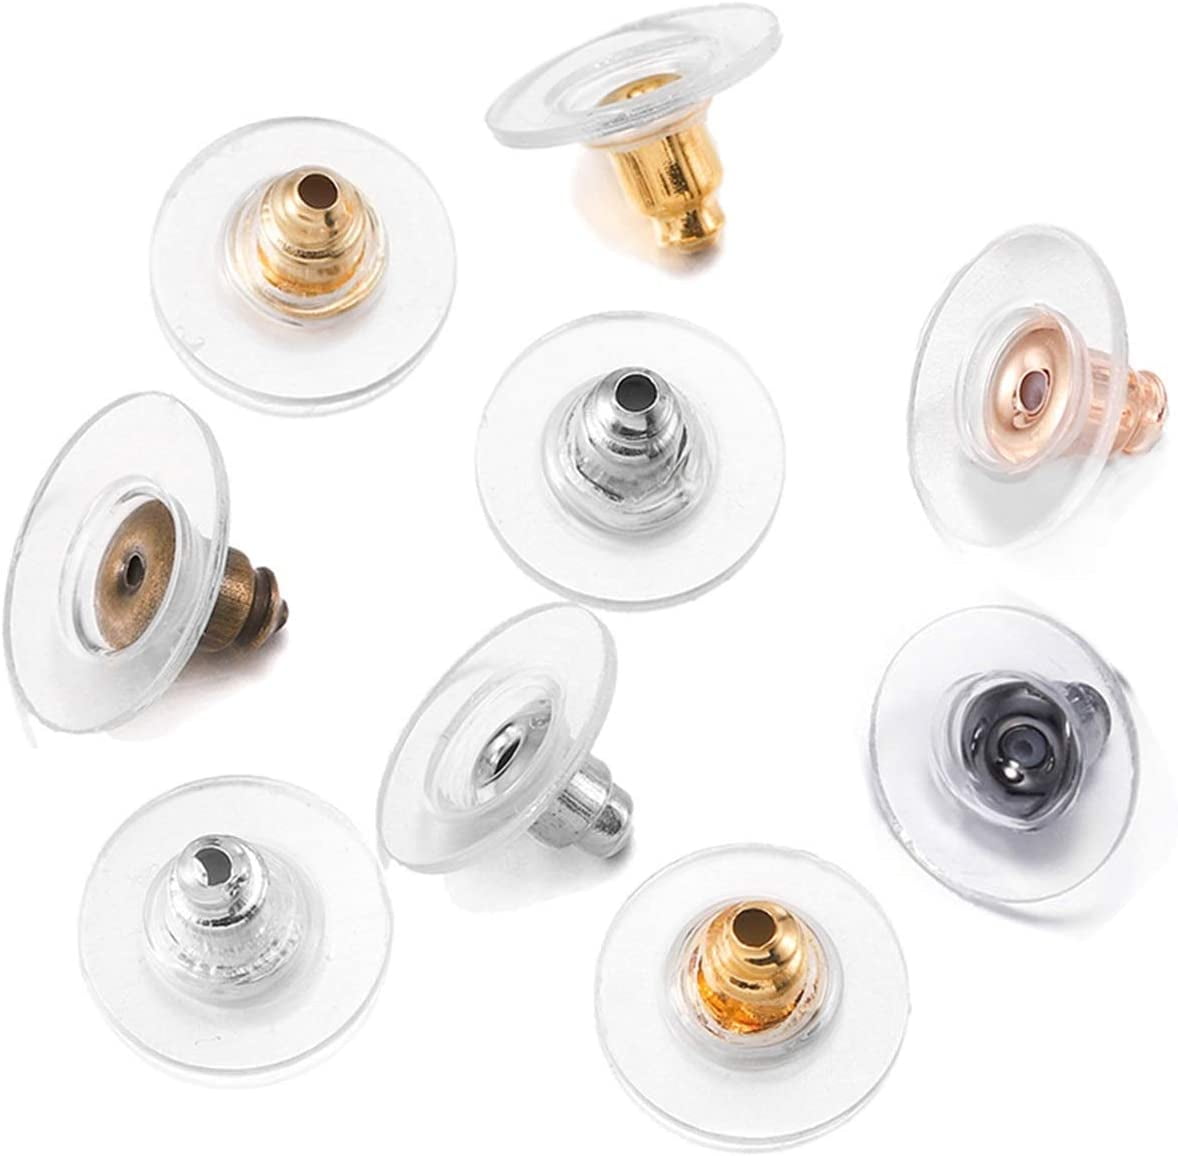 200pcs Ball Plastic Earring Posts Earring Pin Ear Studs with 200pcs  Silicone Clear Bullet Earring Backs for Women Men Girls Sports Work Earrings  Piercing Retainers  Walmartcom